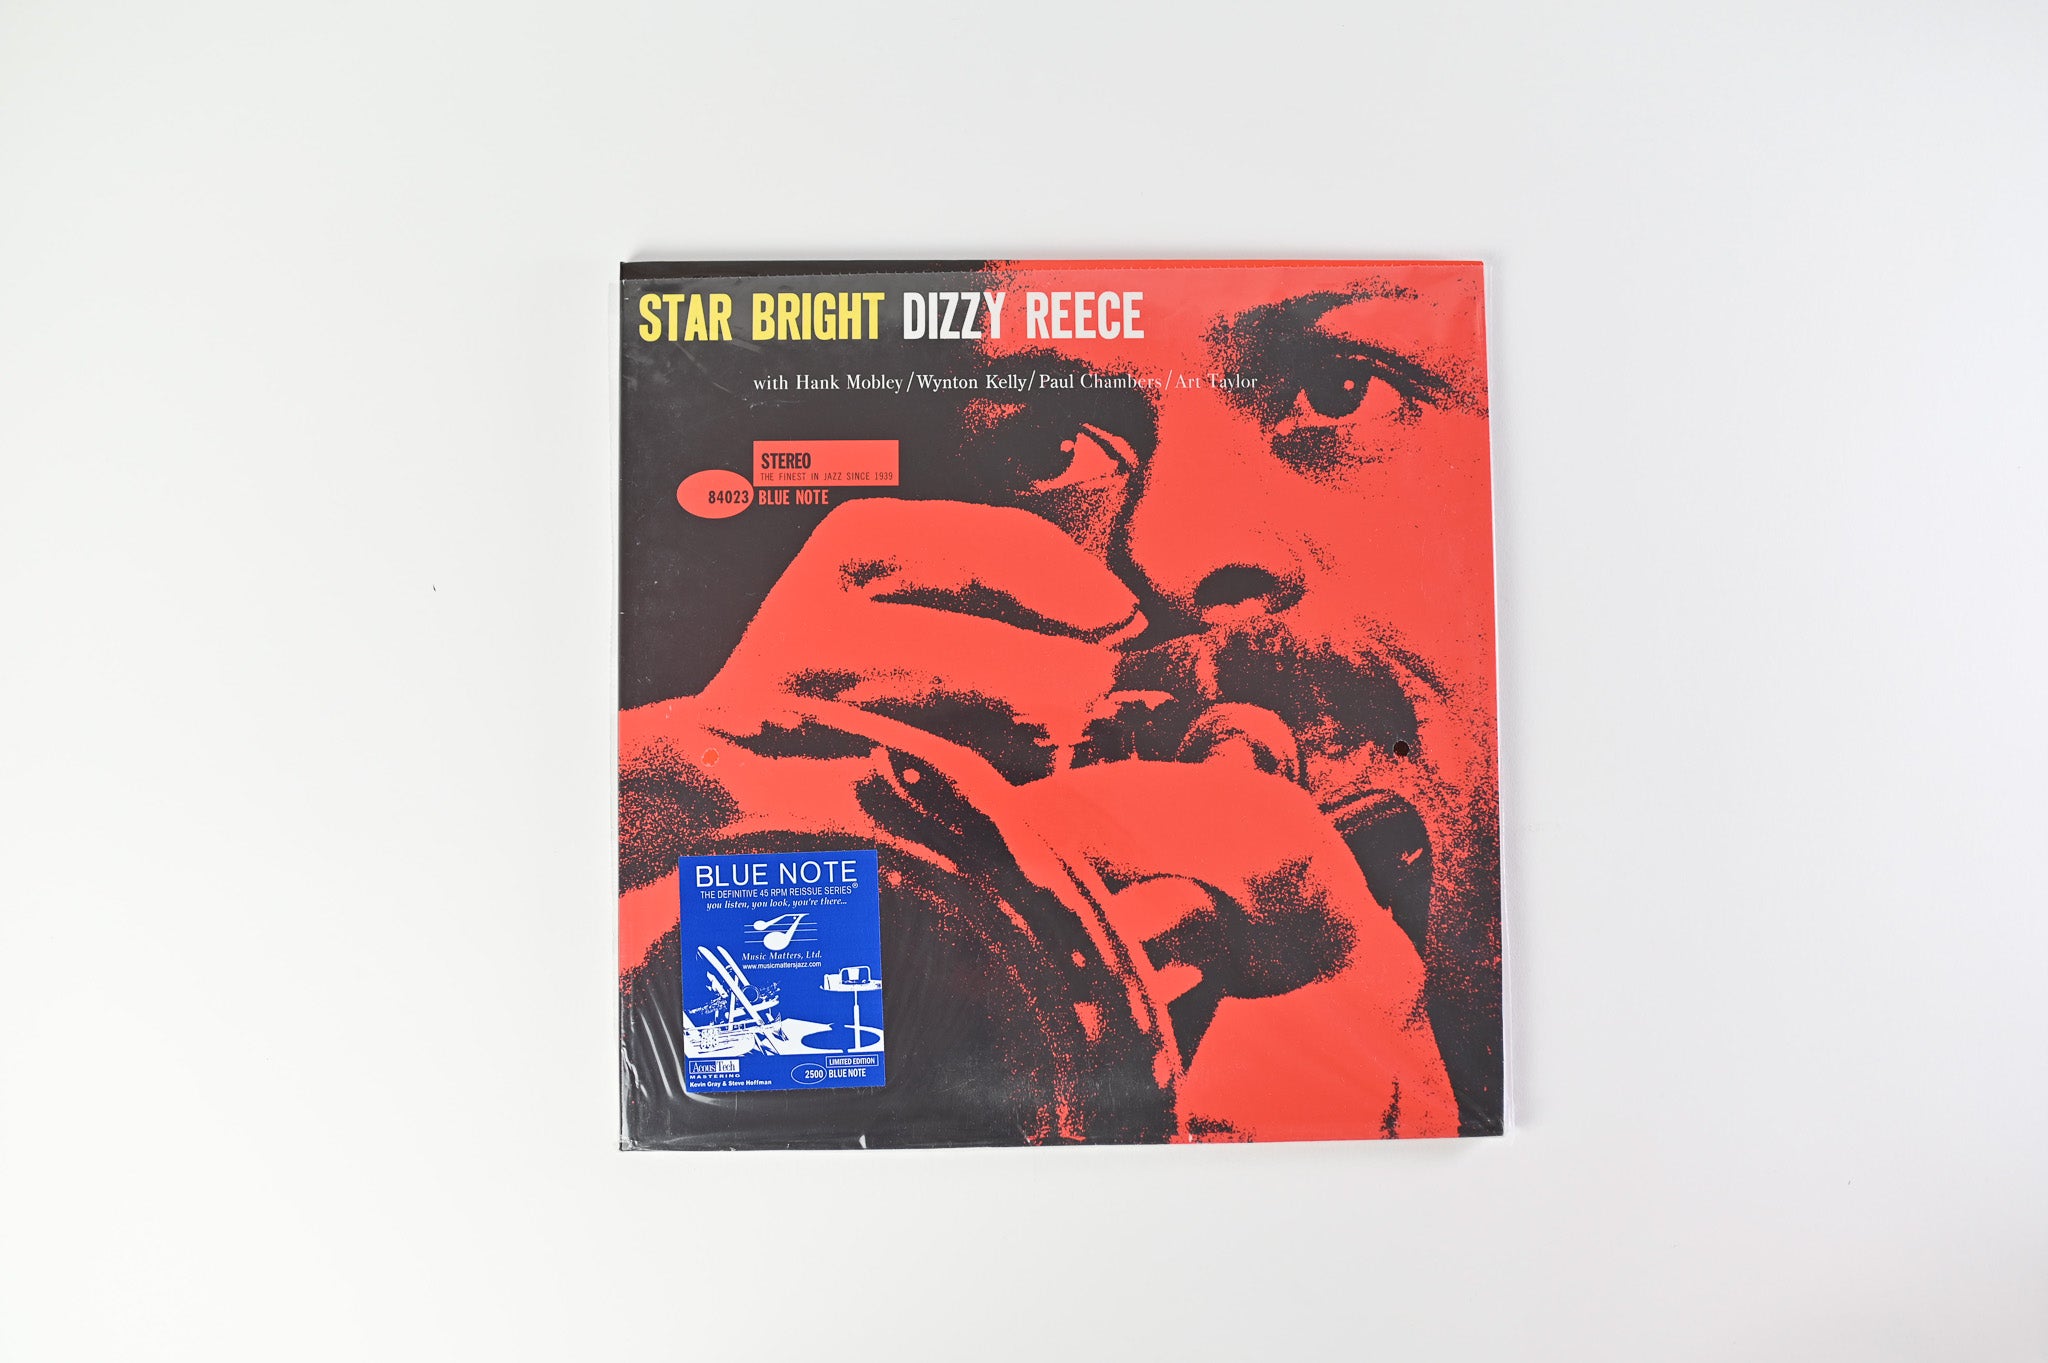 Dizzy Reece - Star Bright on Blue Note Music Matters Ltd Reissue 45 RPM